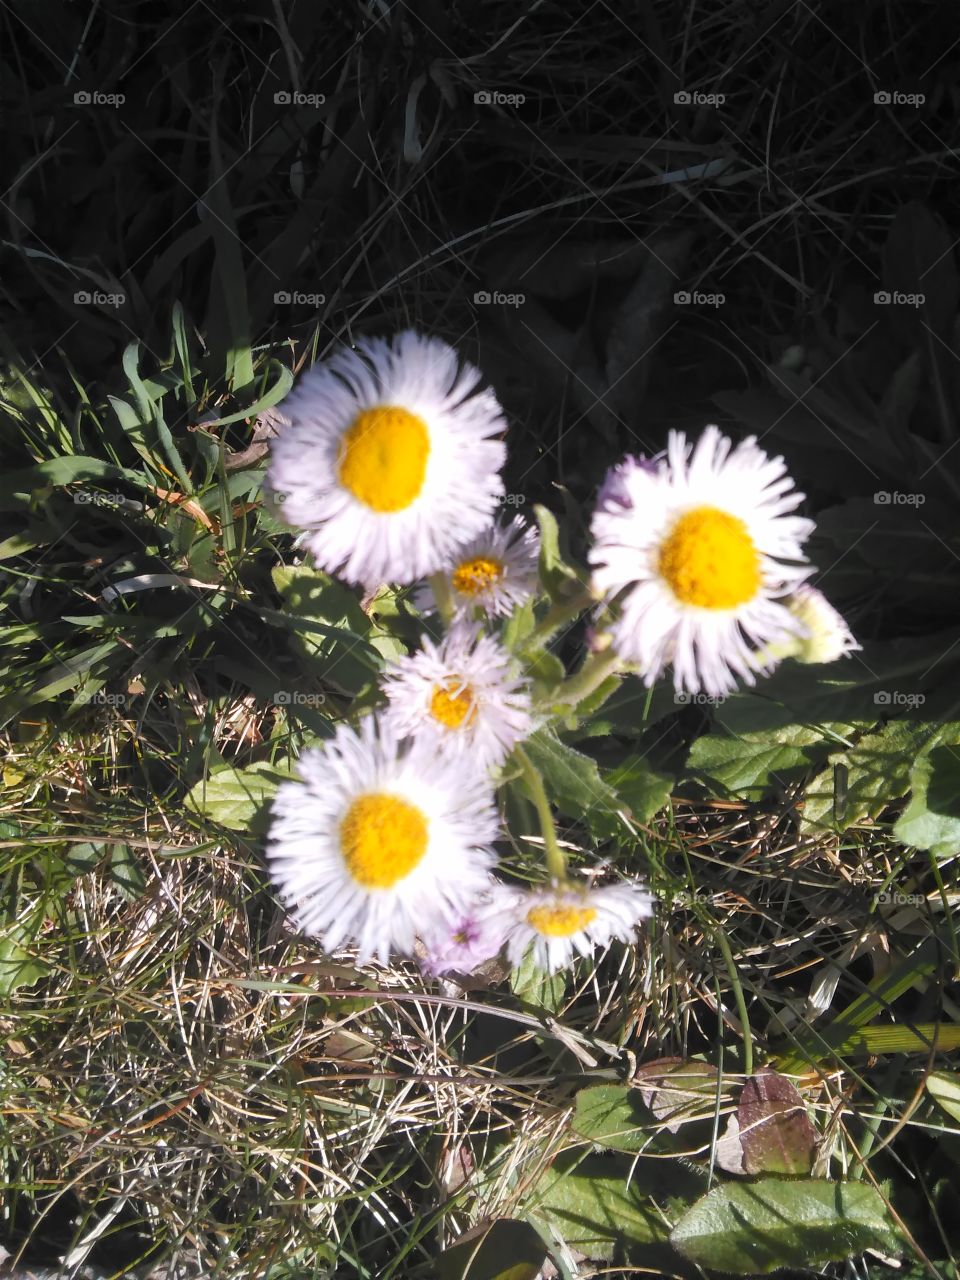 Wild daisies